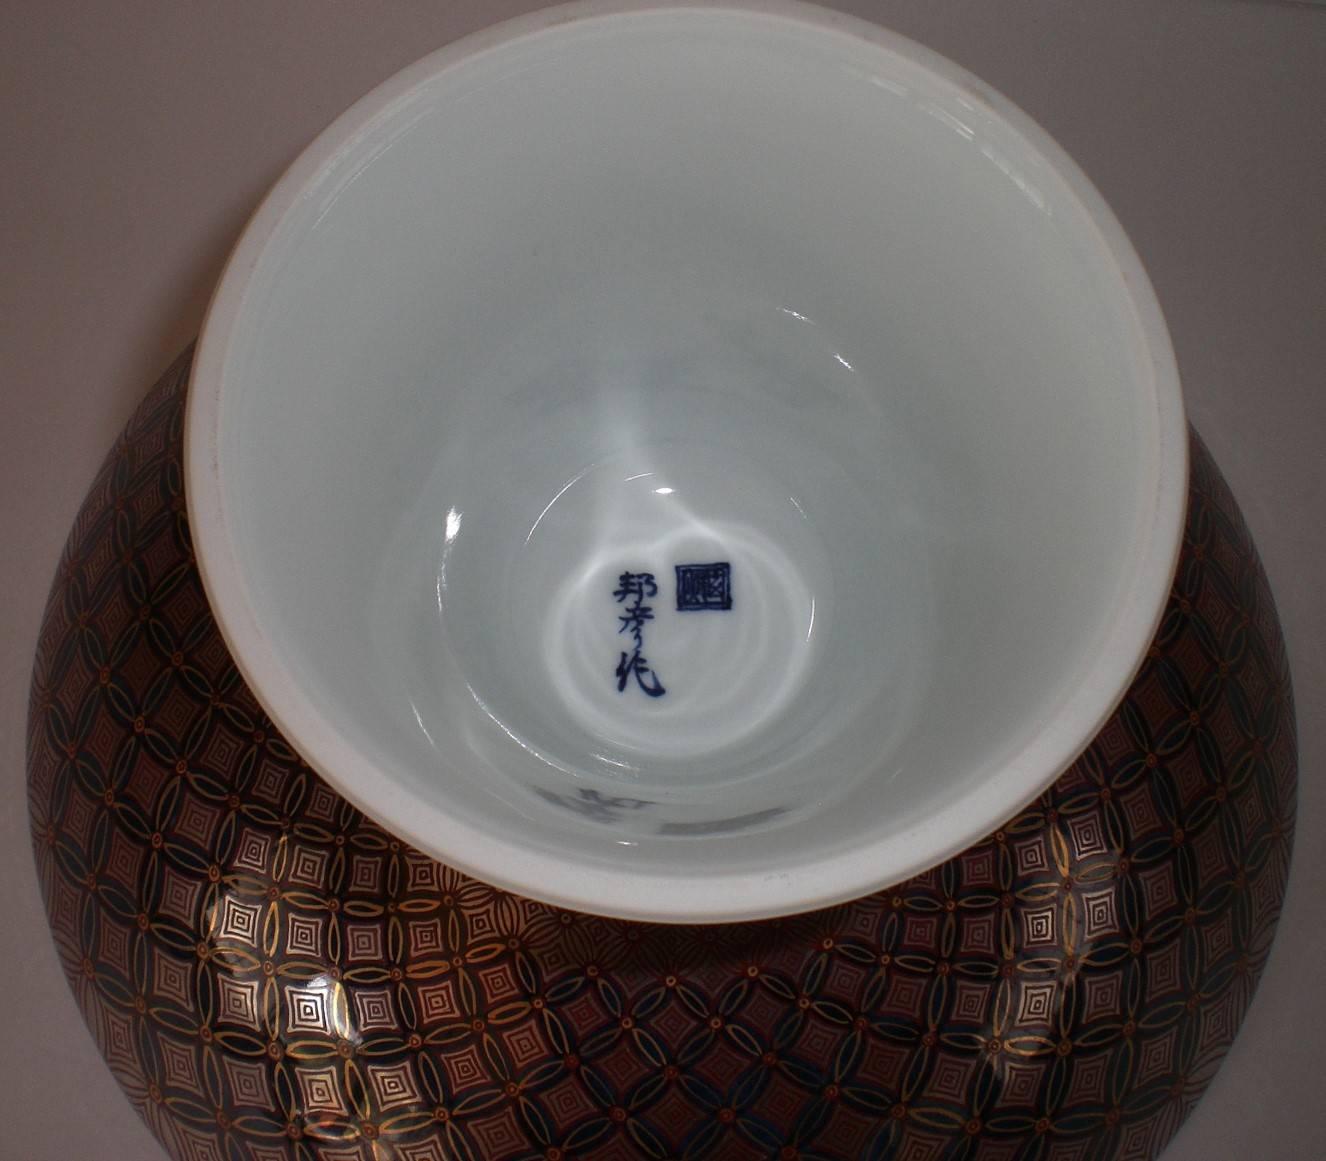 Japanese Gilded Red Blue Imari Porcelain Bowl on Pedestal by Master Artist, 2018 (Gold)